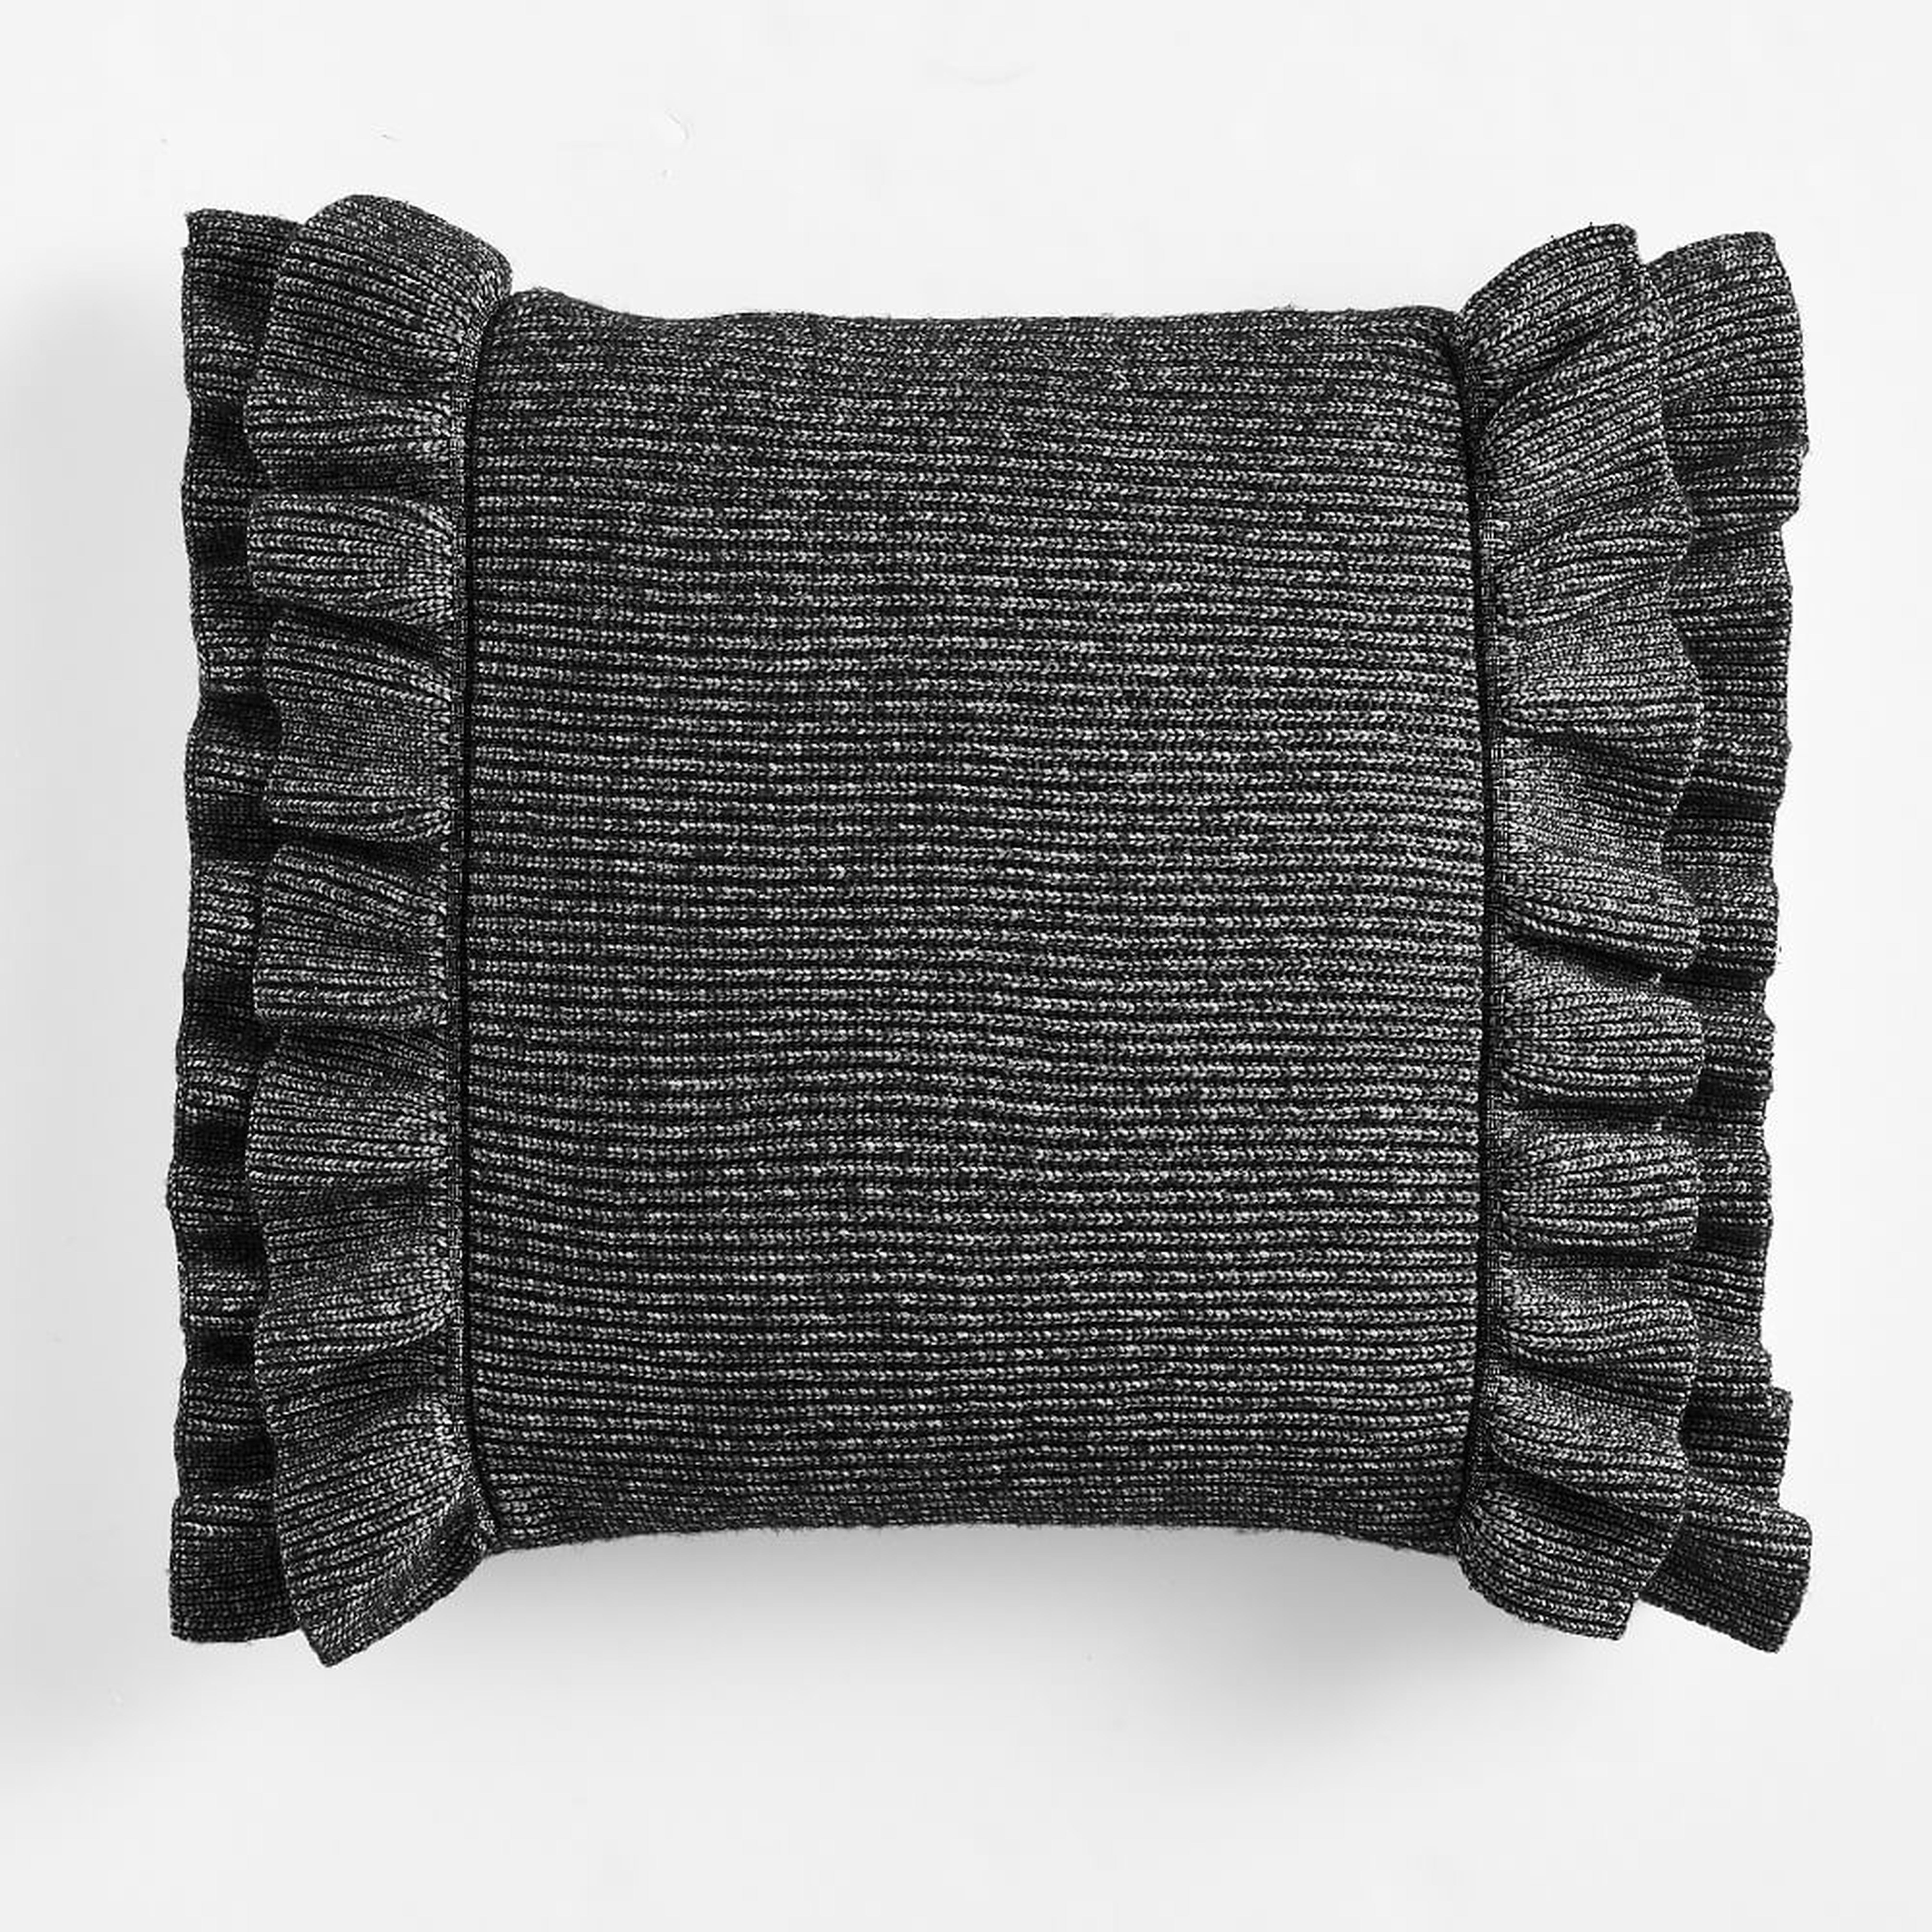 Emily & Meritt Double Ruffle Knit Pillow Cover & Insert, 18x18, Washed Black - Pottery Barn Teen